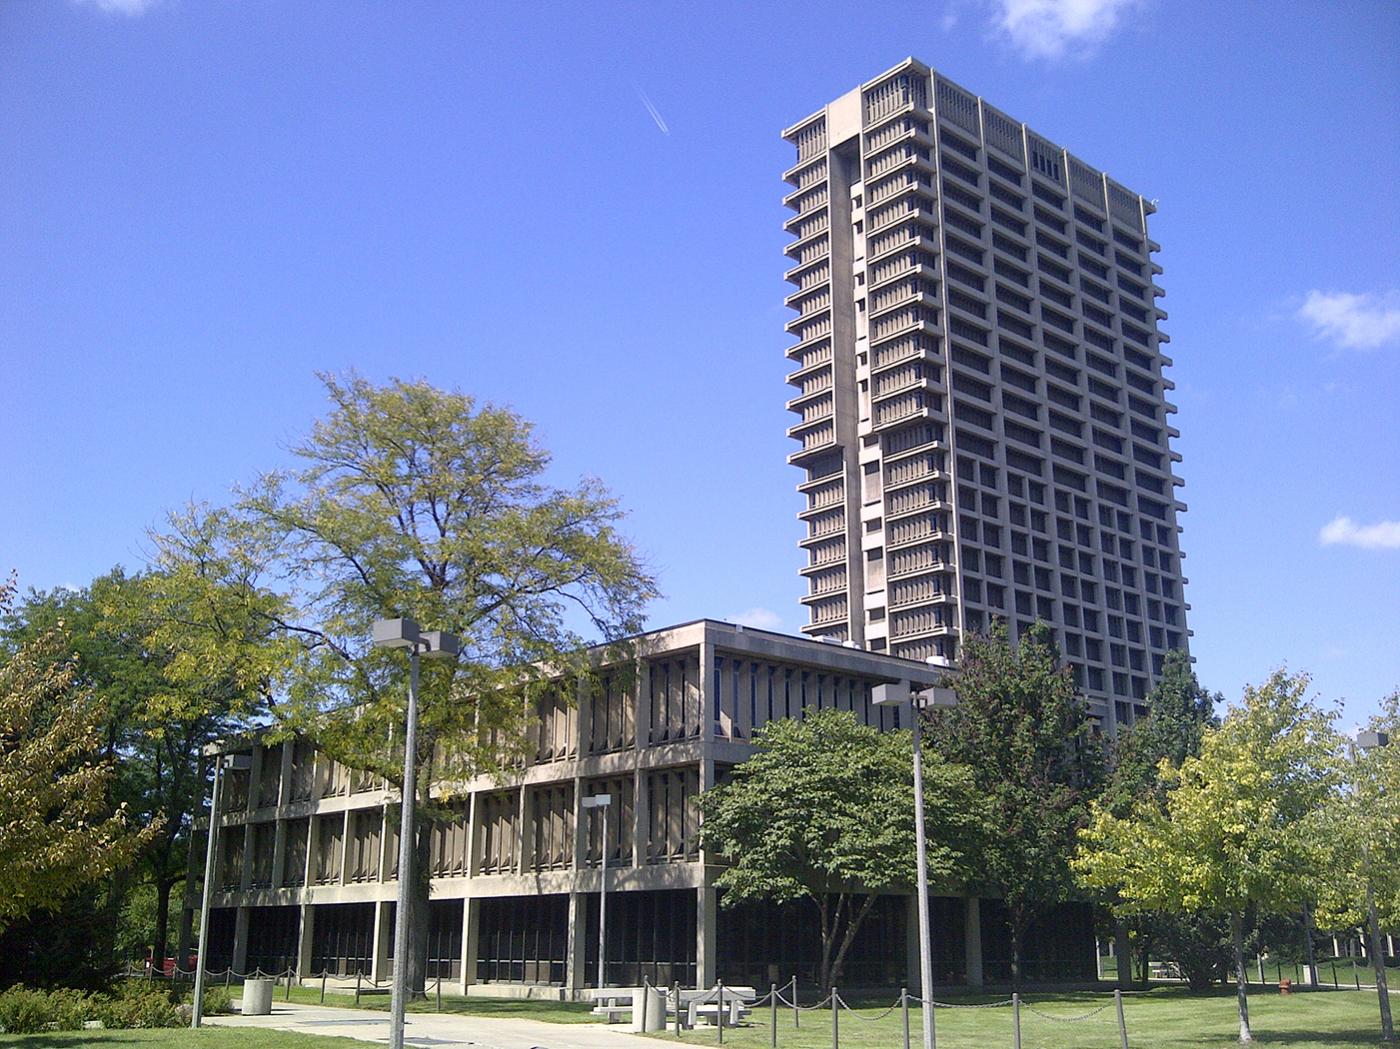 University Hall at the University of Illinois Chicago